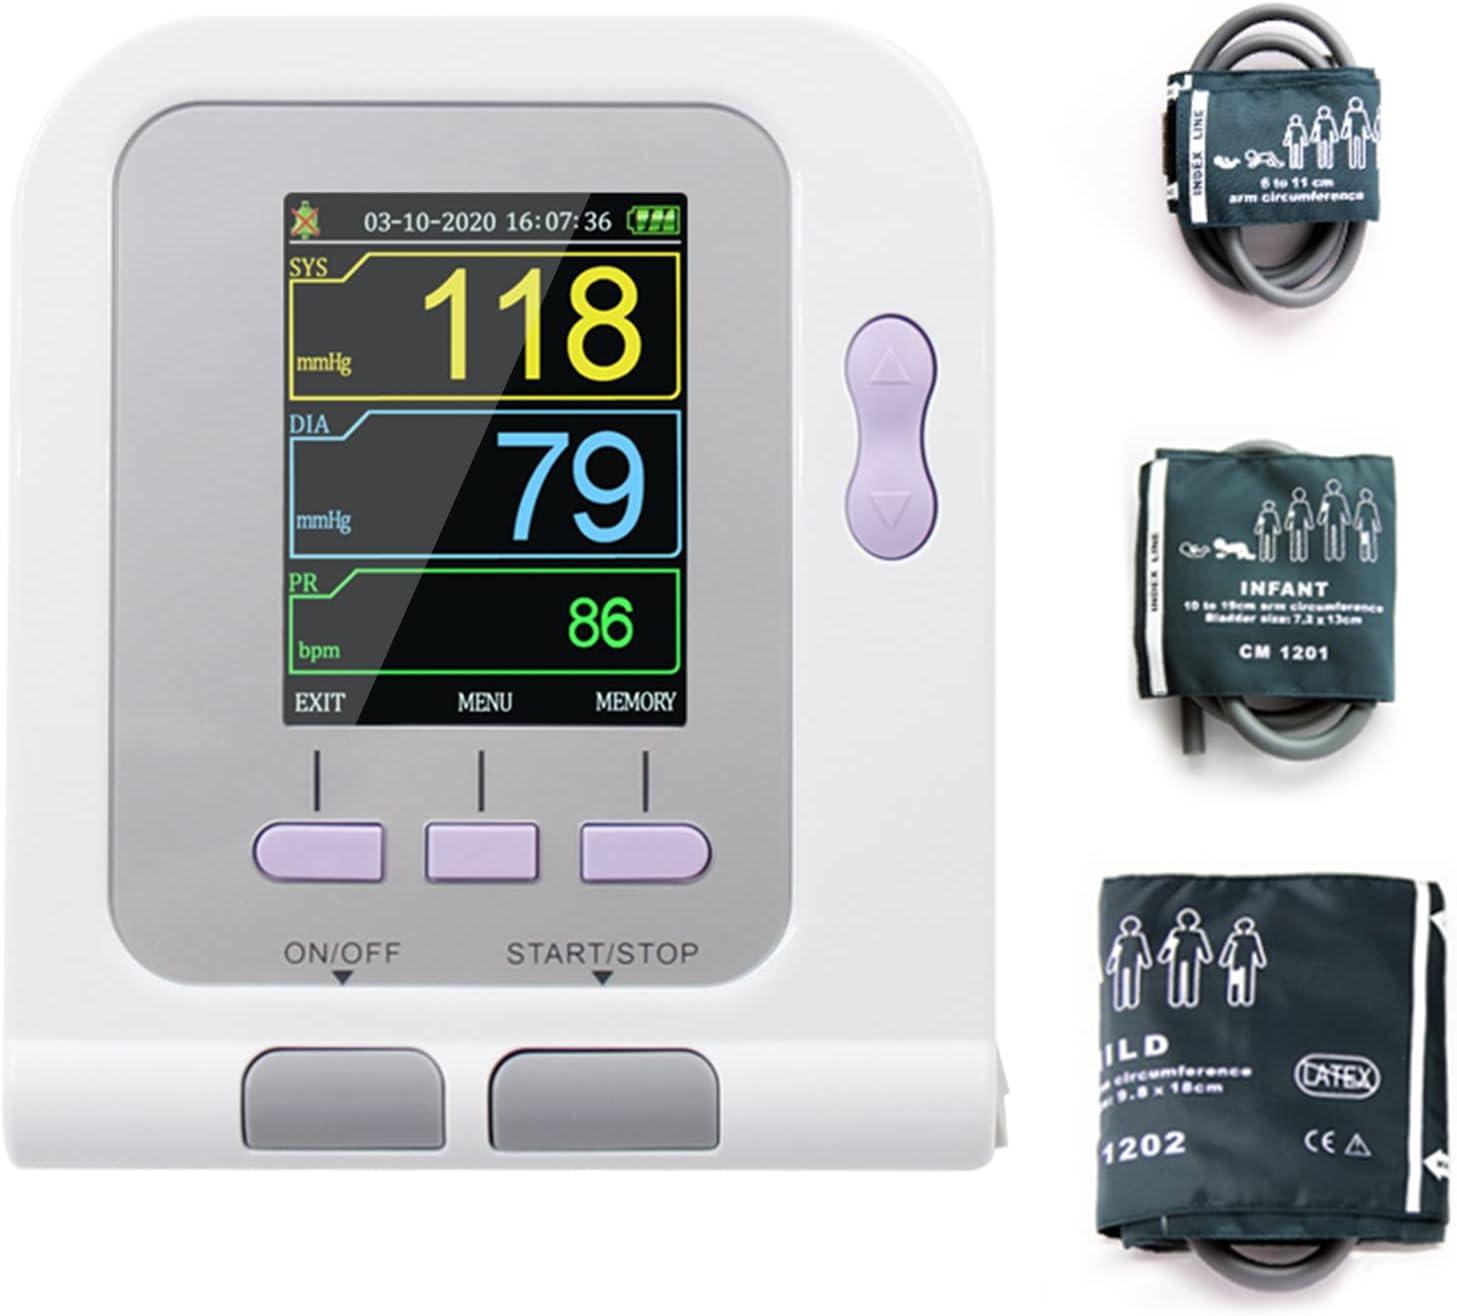 CONTEC08A VET Digital Veterinary Blood Pressure Monitor NIBP PC